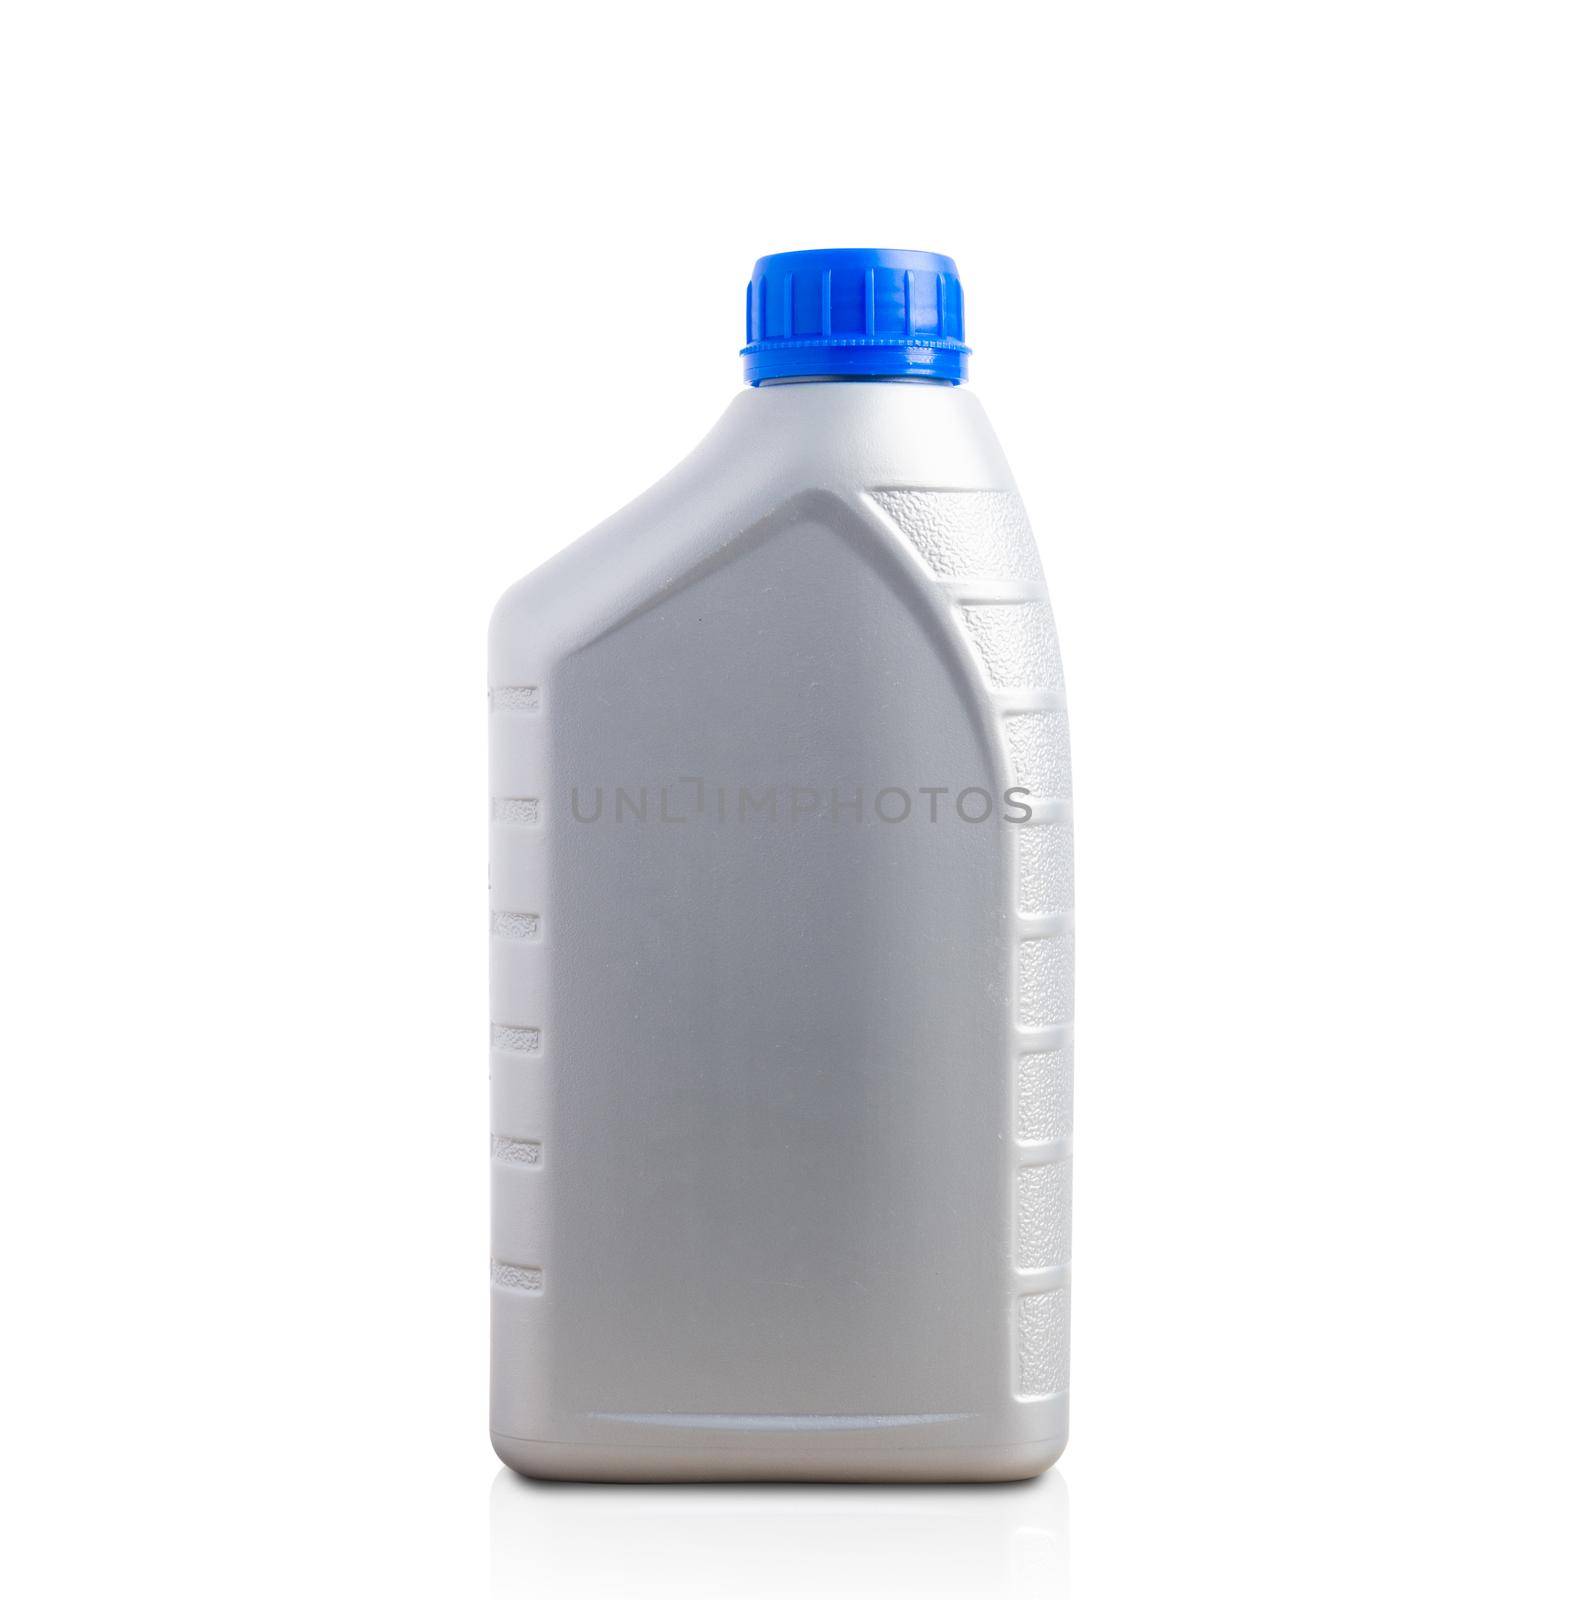 Gray plastic can machine lubricating oil bottle 1 liter by Sorapop